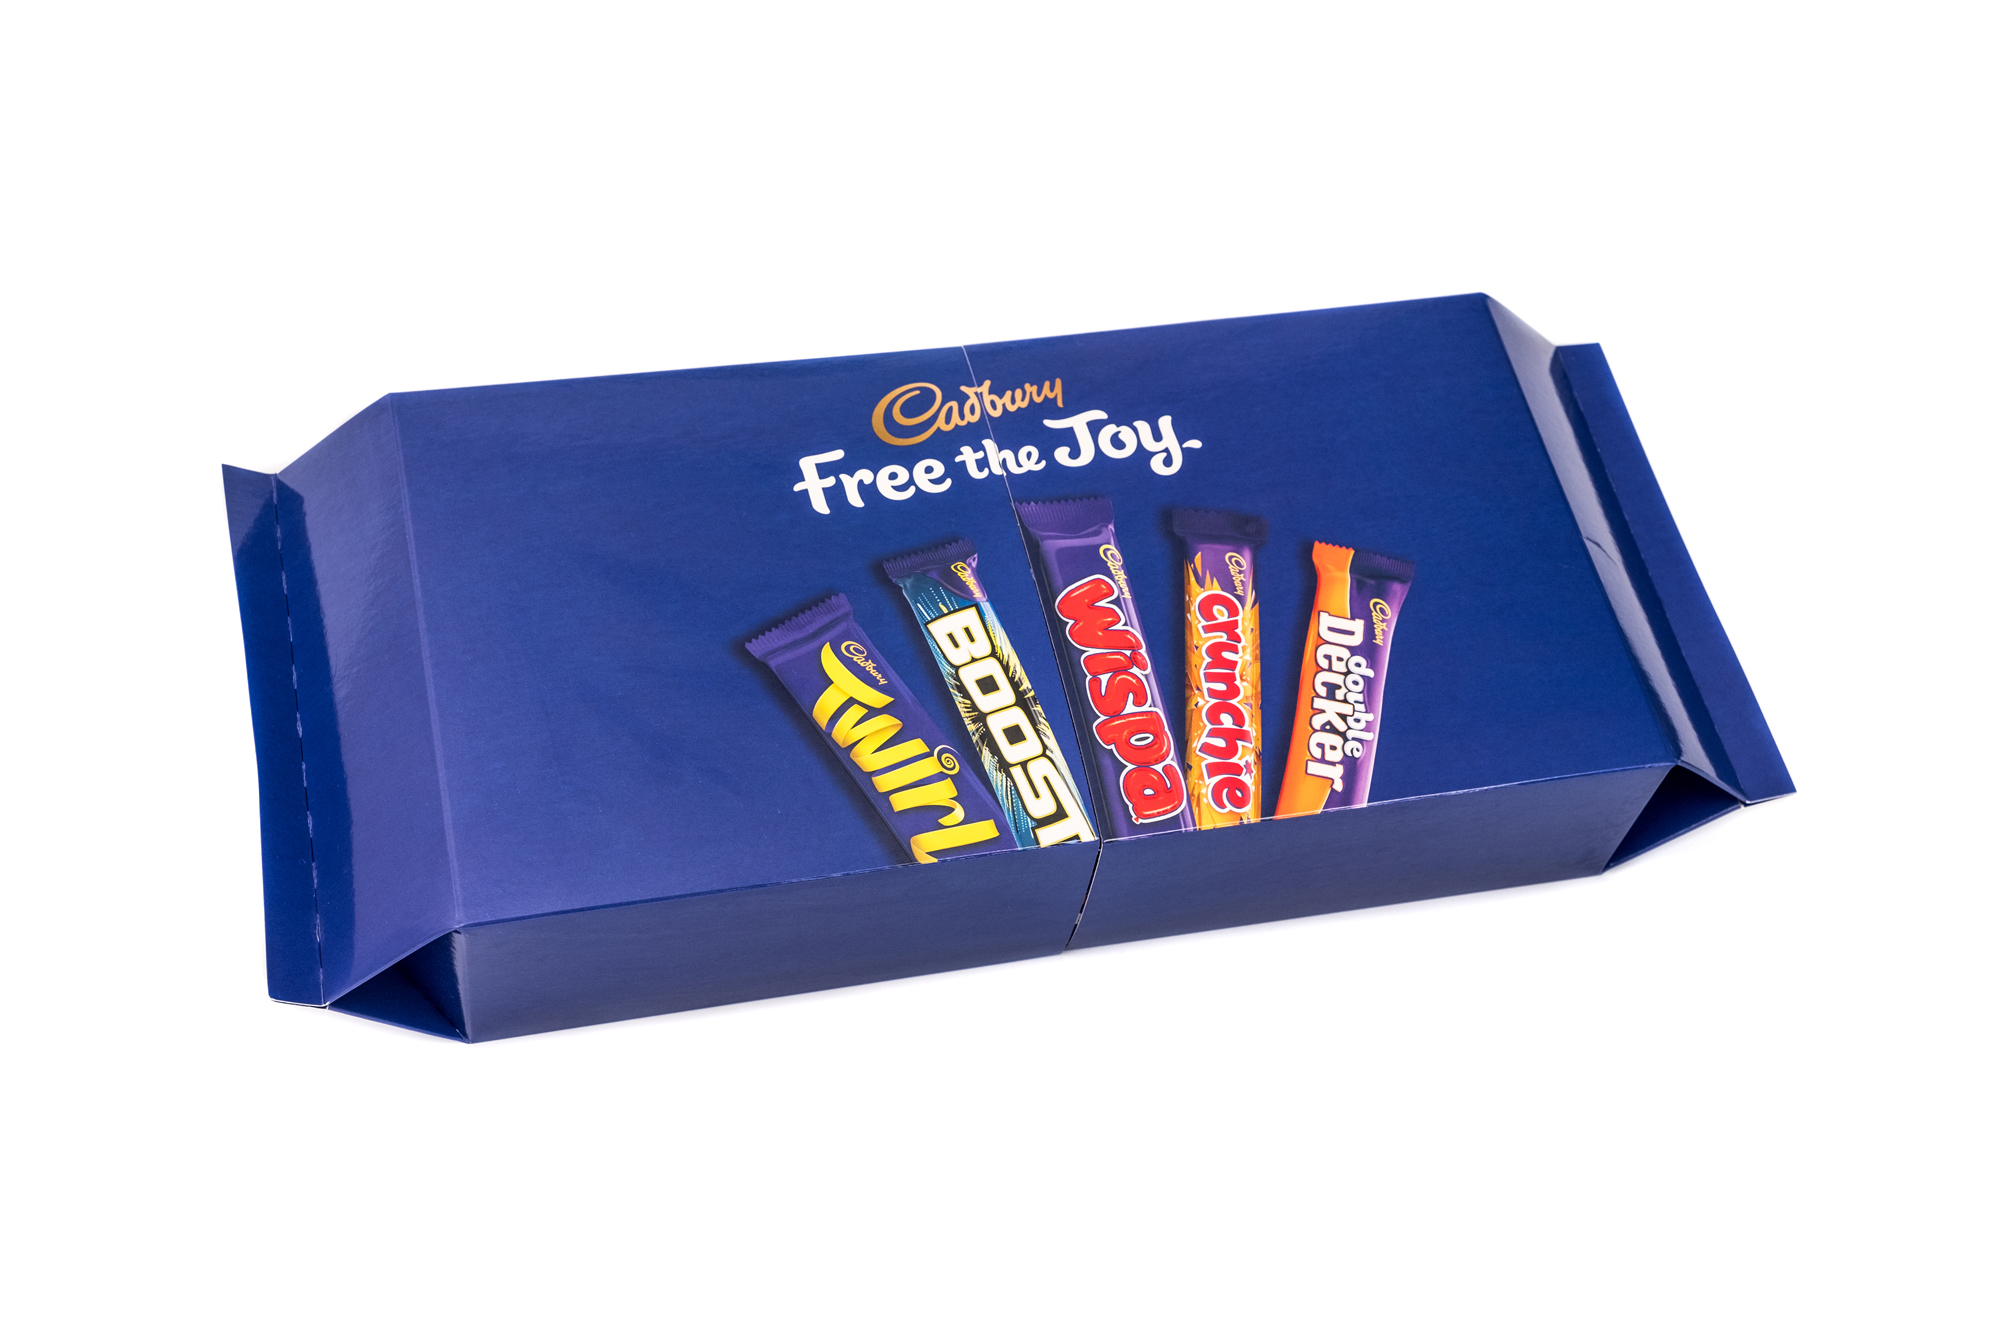 Cadburys Promotional Box Design and Print